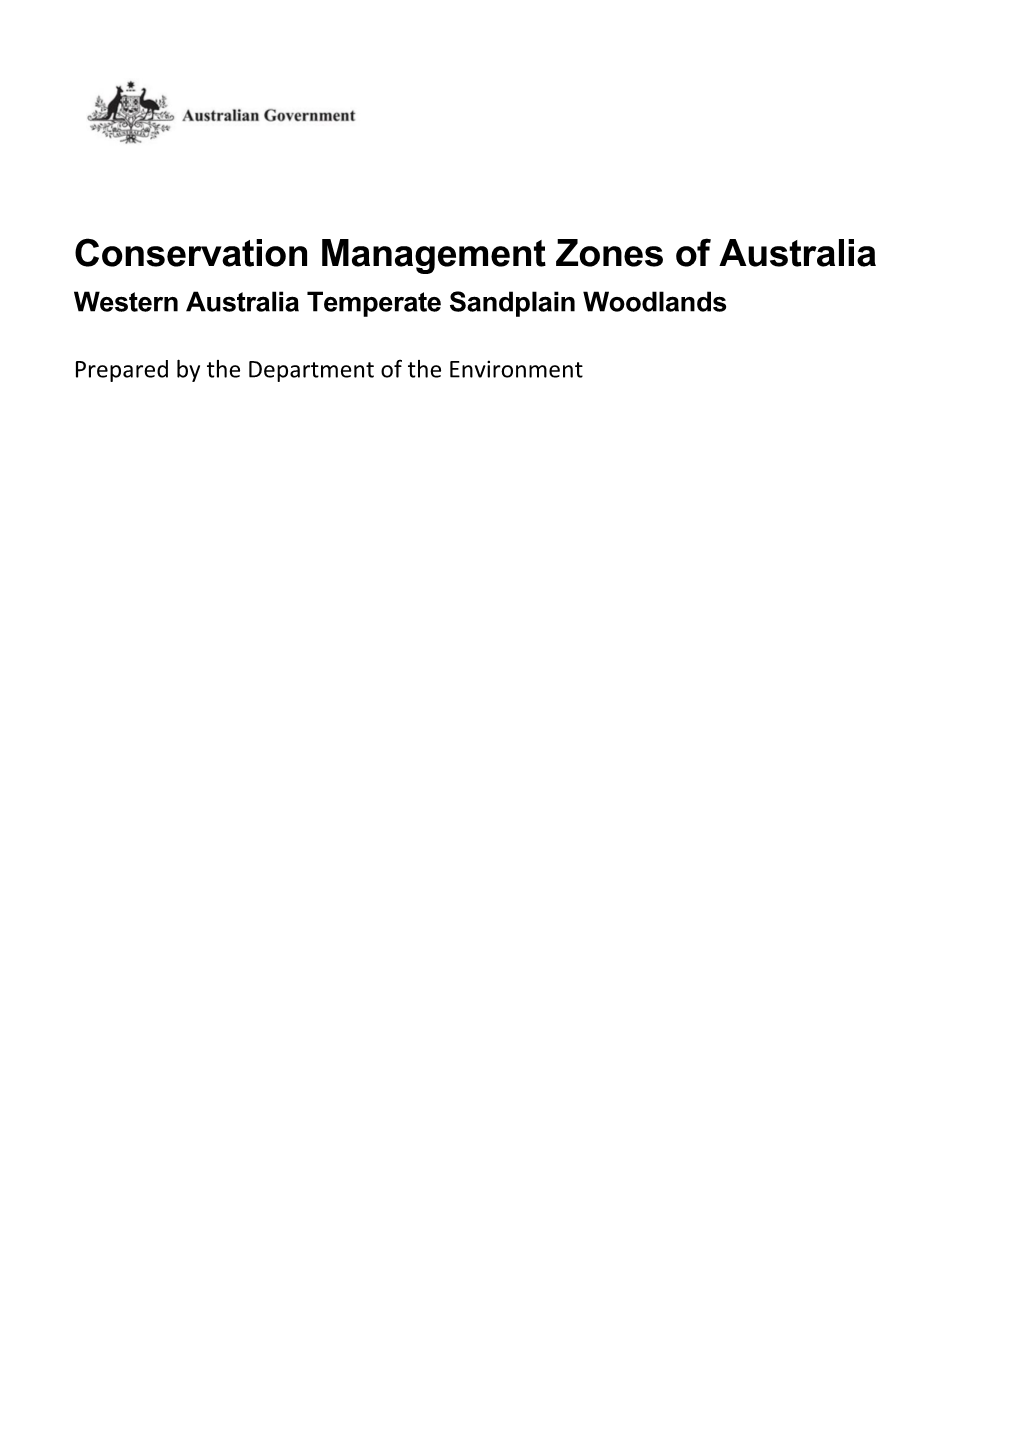 Conservation Management Zones of Australia Western Australia Temperate Sandplain Woodlands